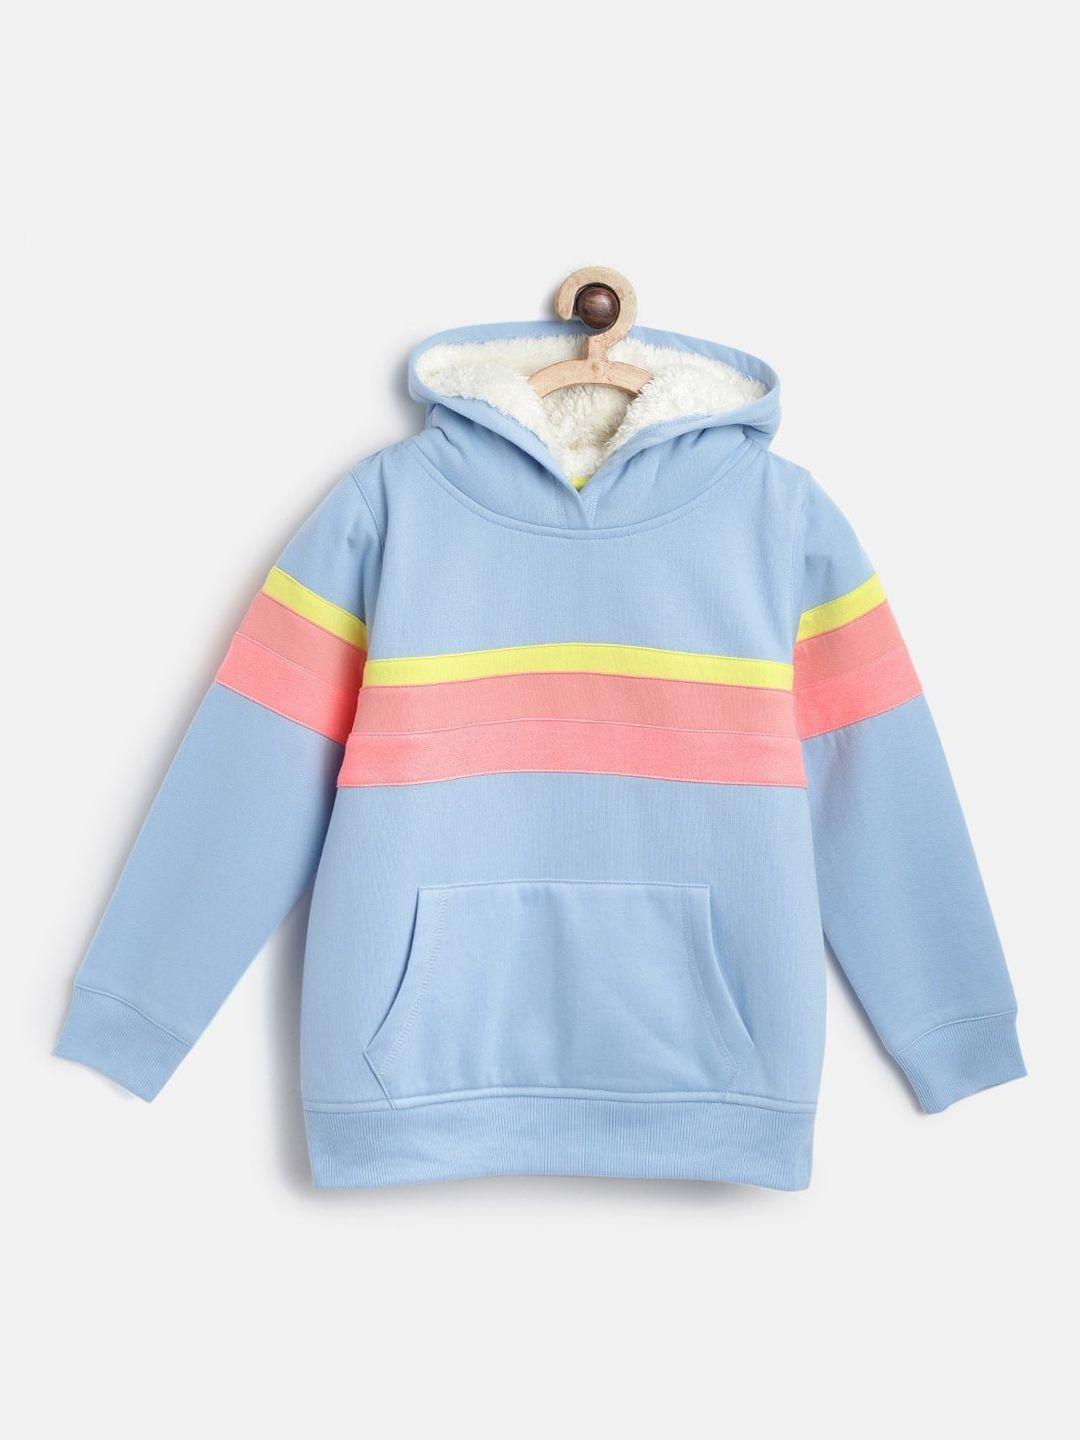 cherry crumble unisex kids blue colourblocked hooded sweatshirt